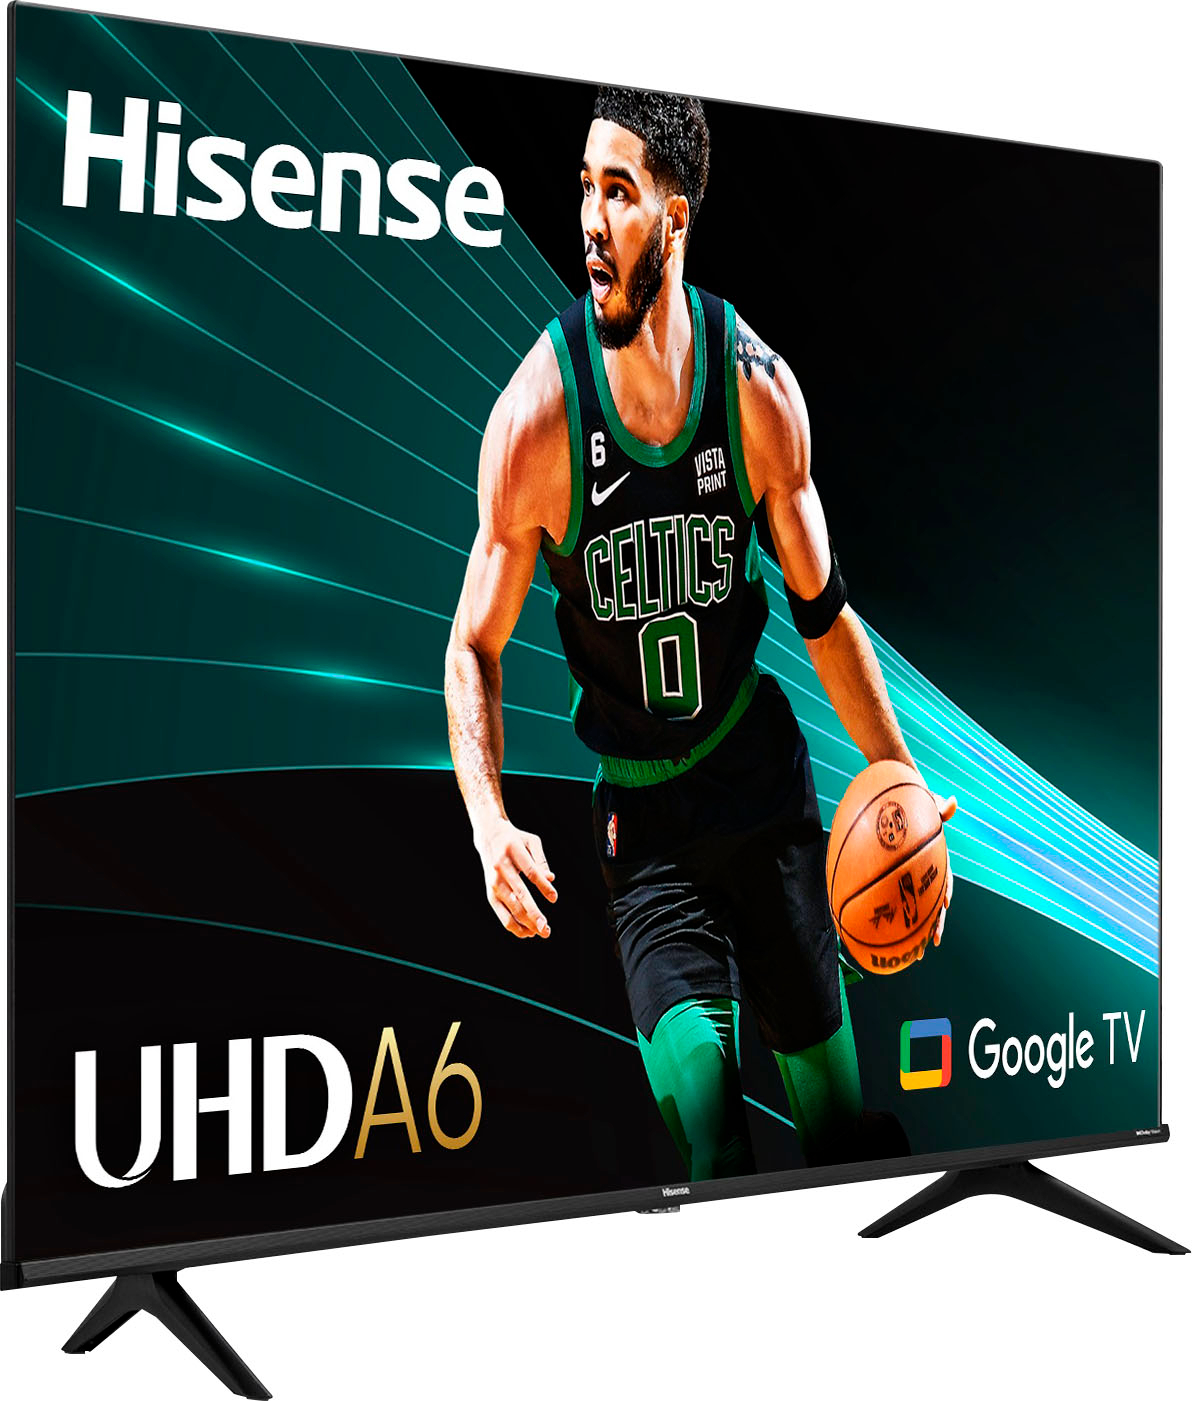 Hisense 75 Class 4K UHD LED LCD Roku Smart TV HDR R6 Series 75R6E4 